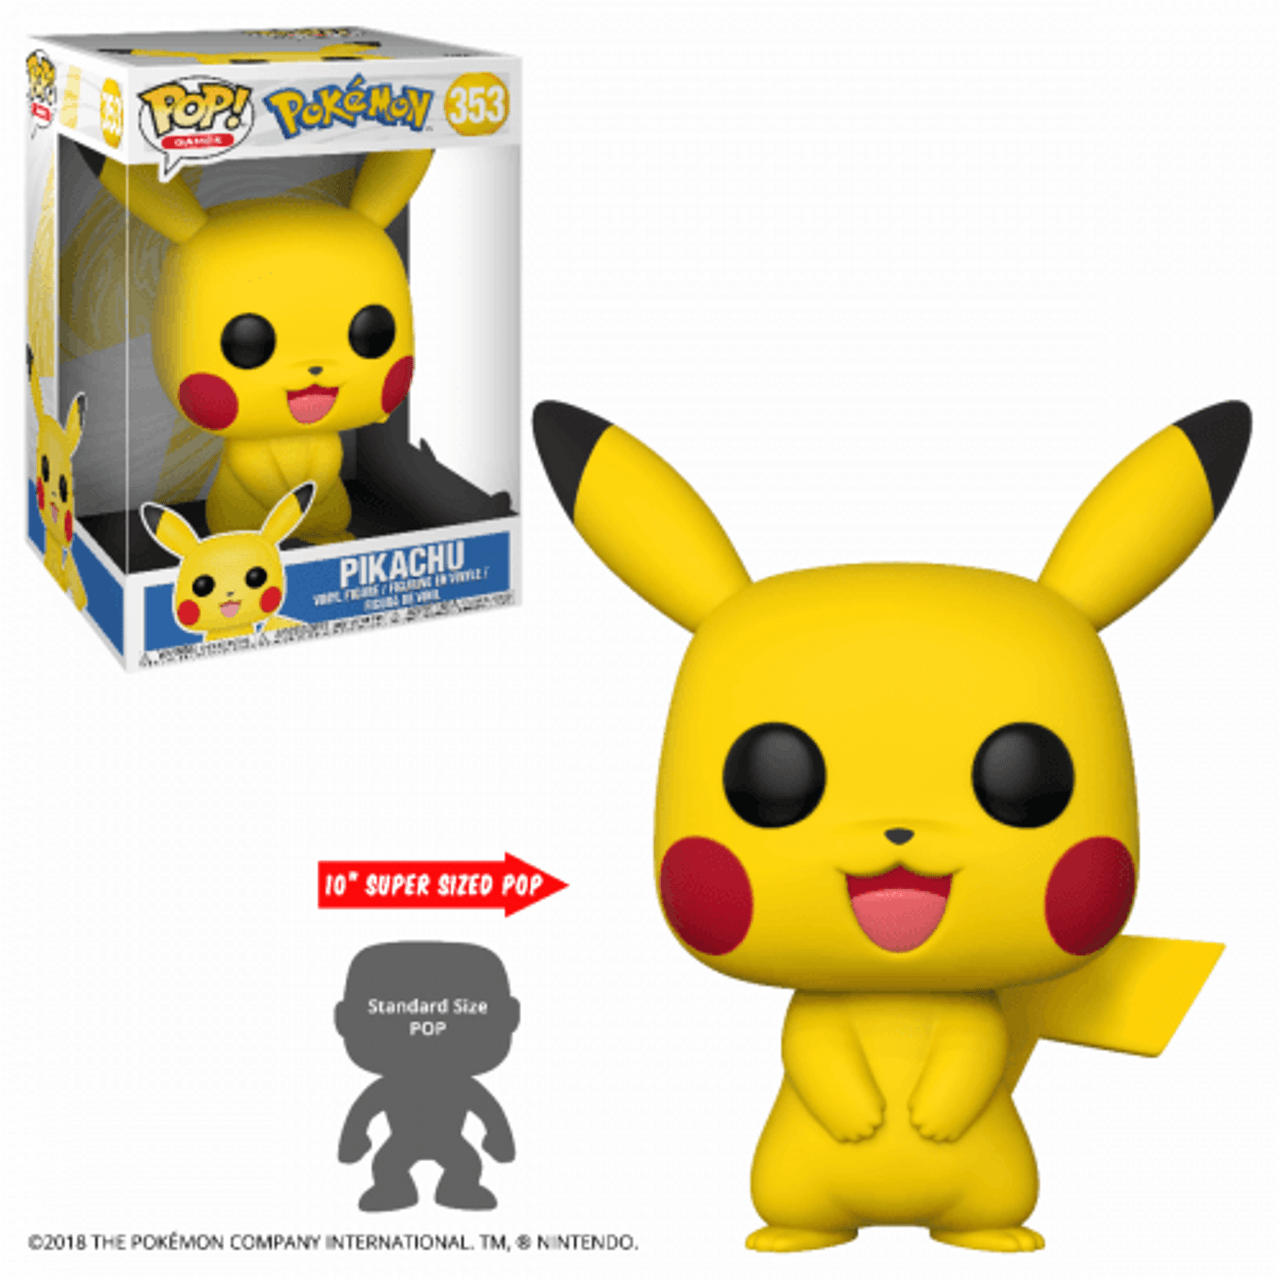 POP! Games - Pokemon #353 Pikachu 10-Inch Super Sized